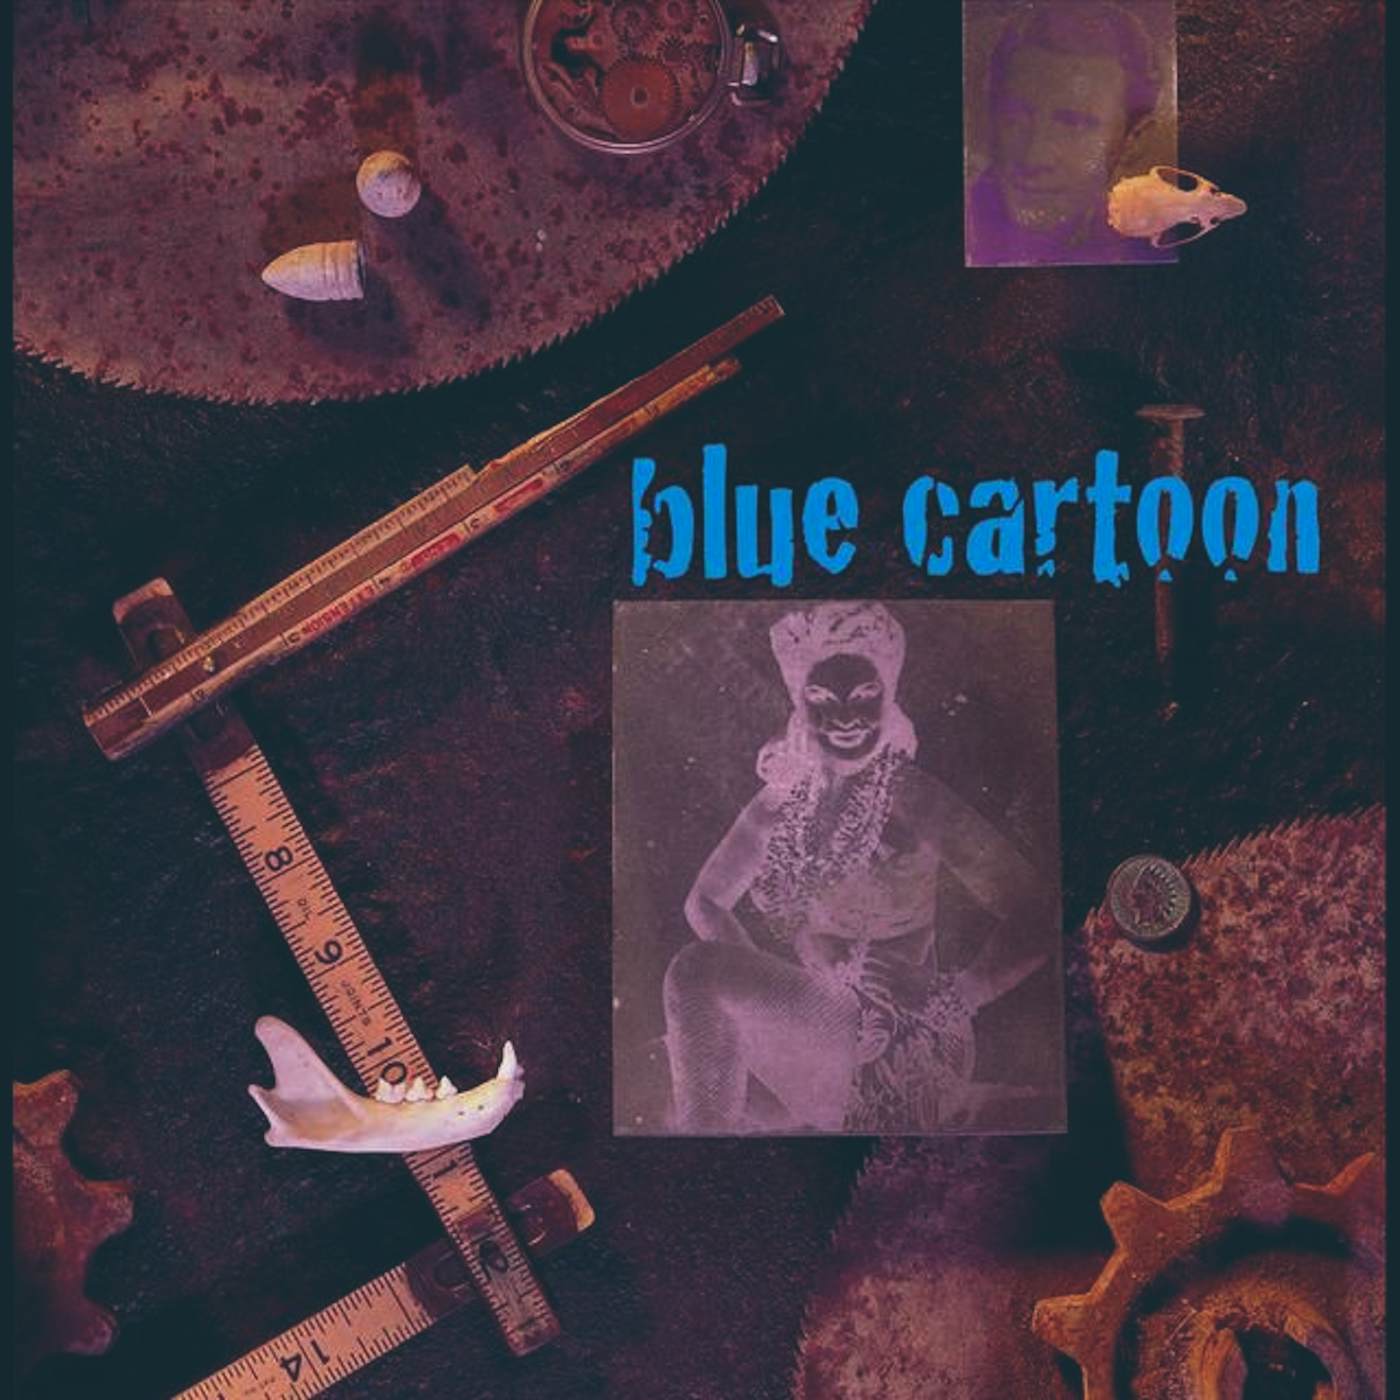 Blue Cartoon